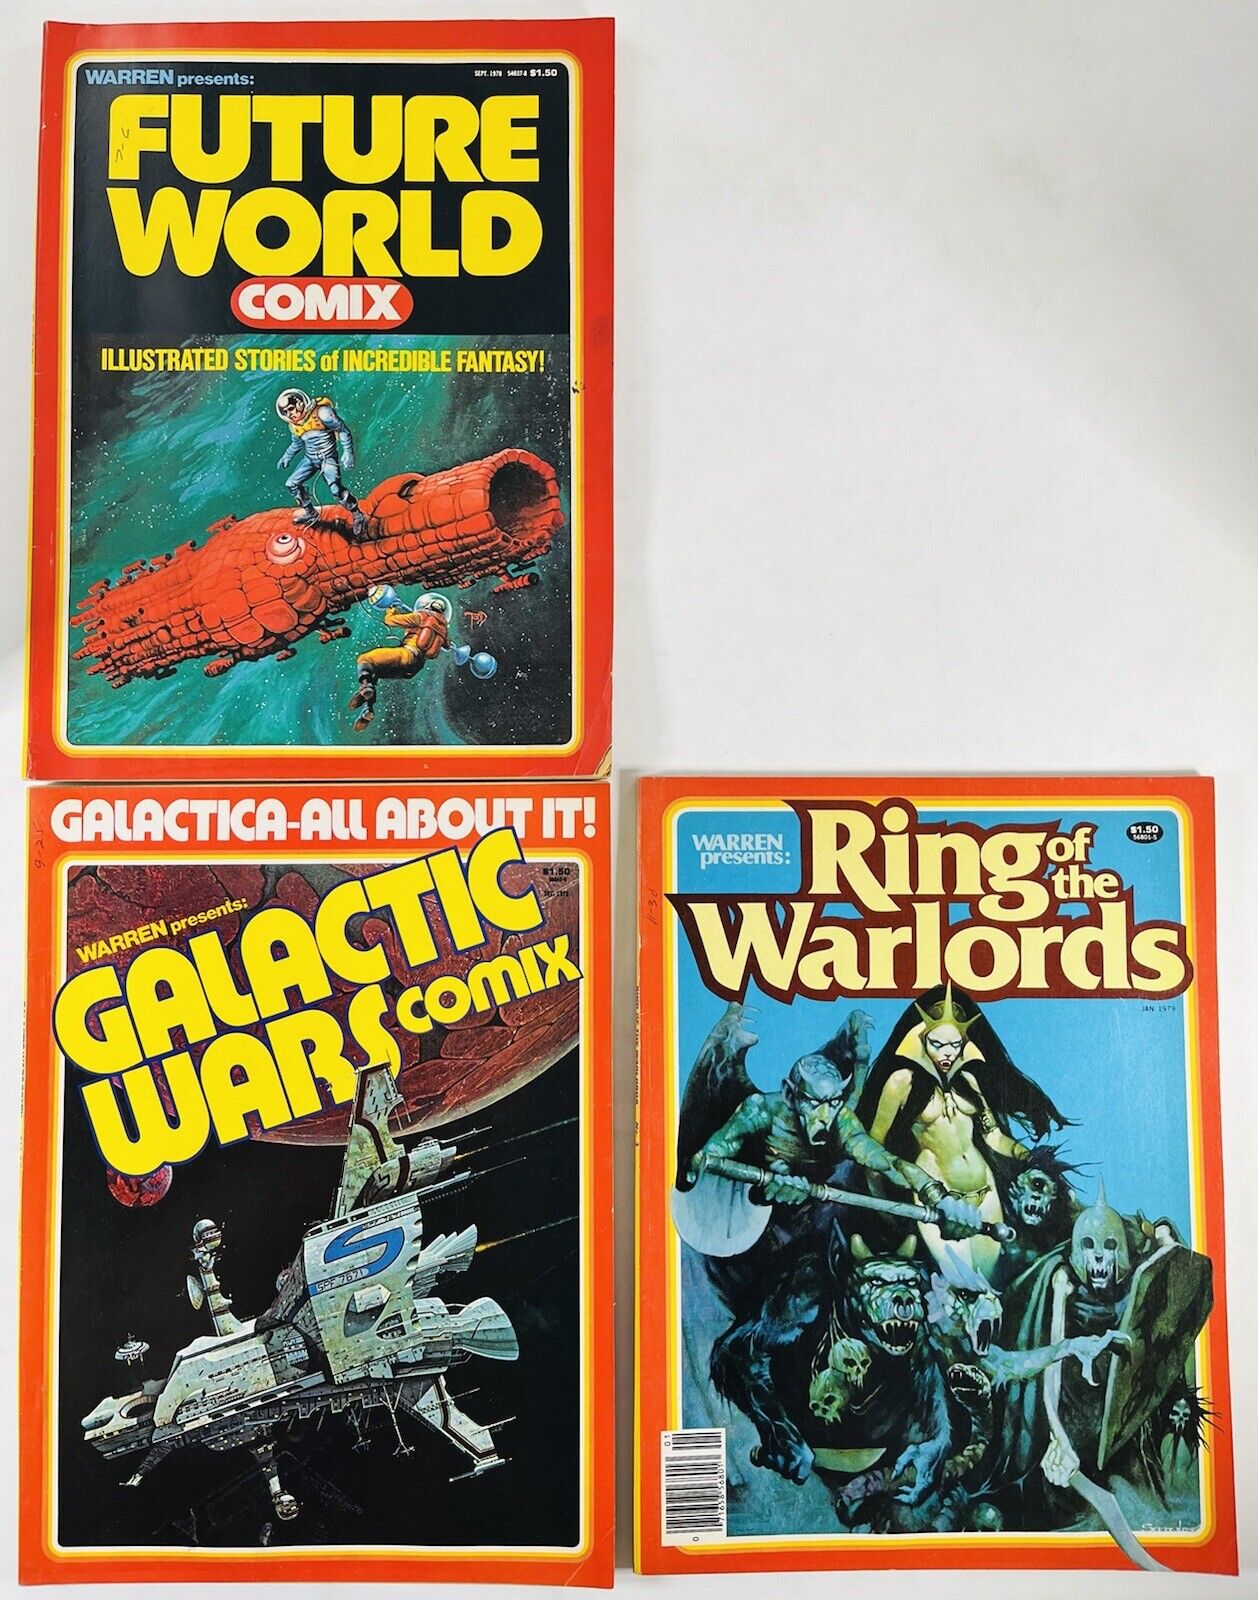 3 WARREN PRESENTS MAGAZINES RING OF WARLORDS / GALACTIC WARS / FUTURE WORLD 1978